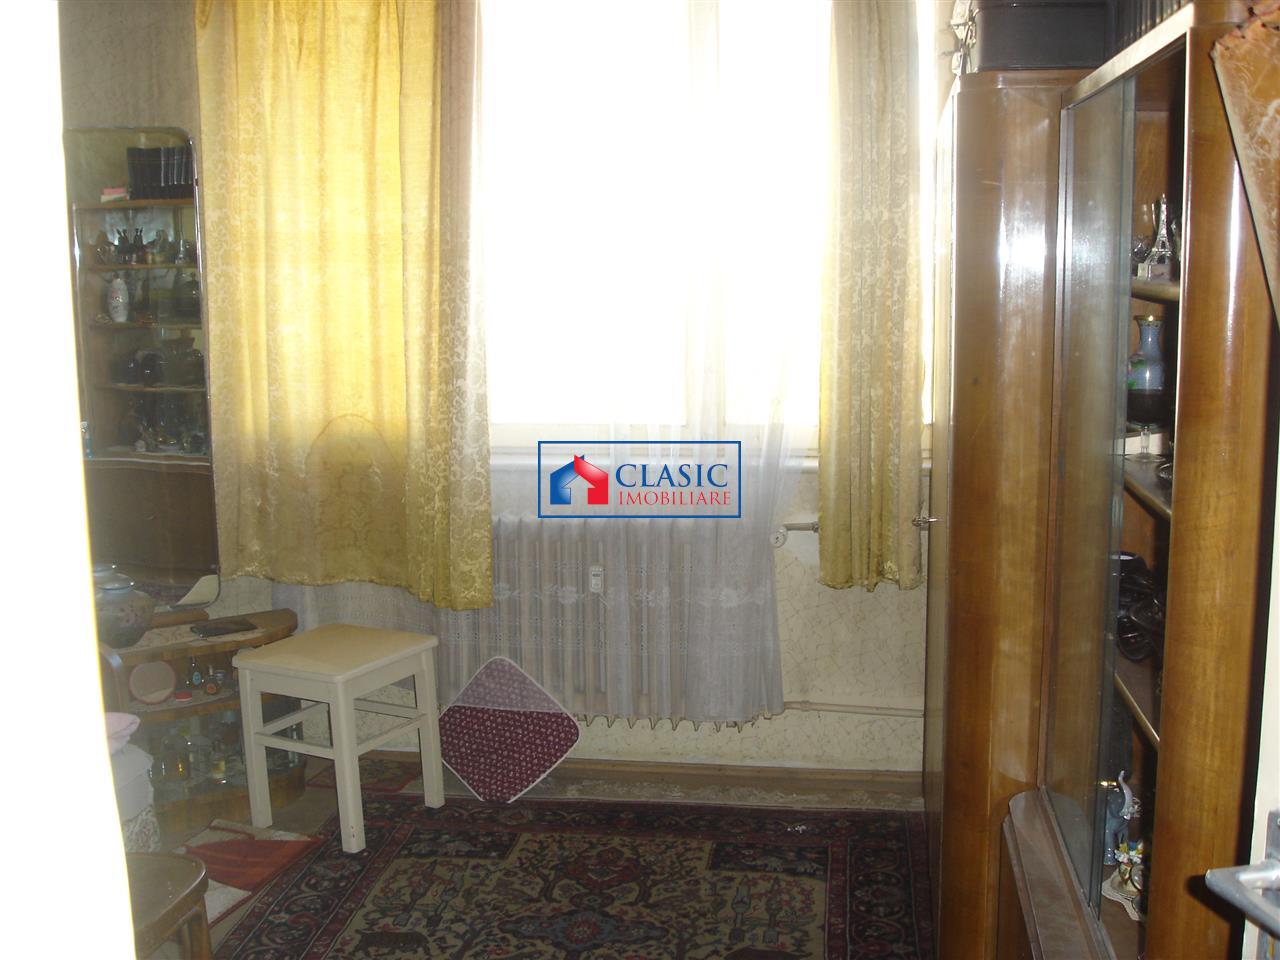 Vanzare Apartament 2 camere in Grigorescu langa strada Macului